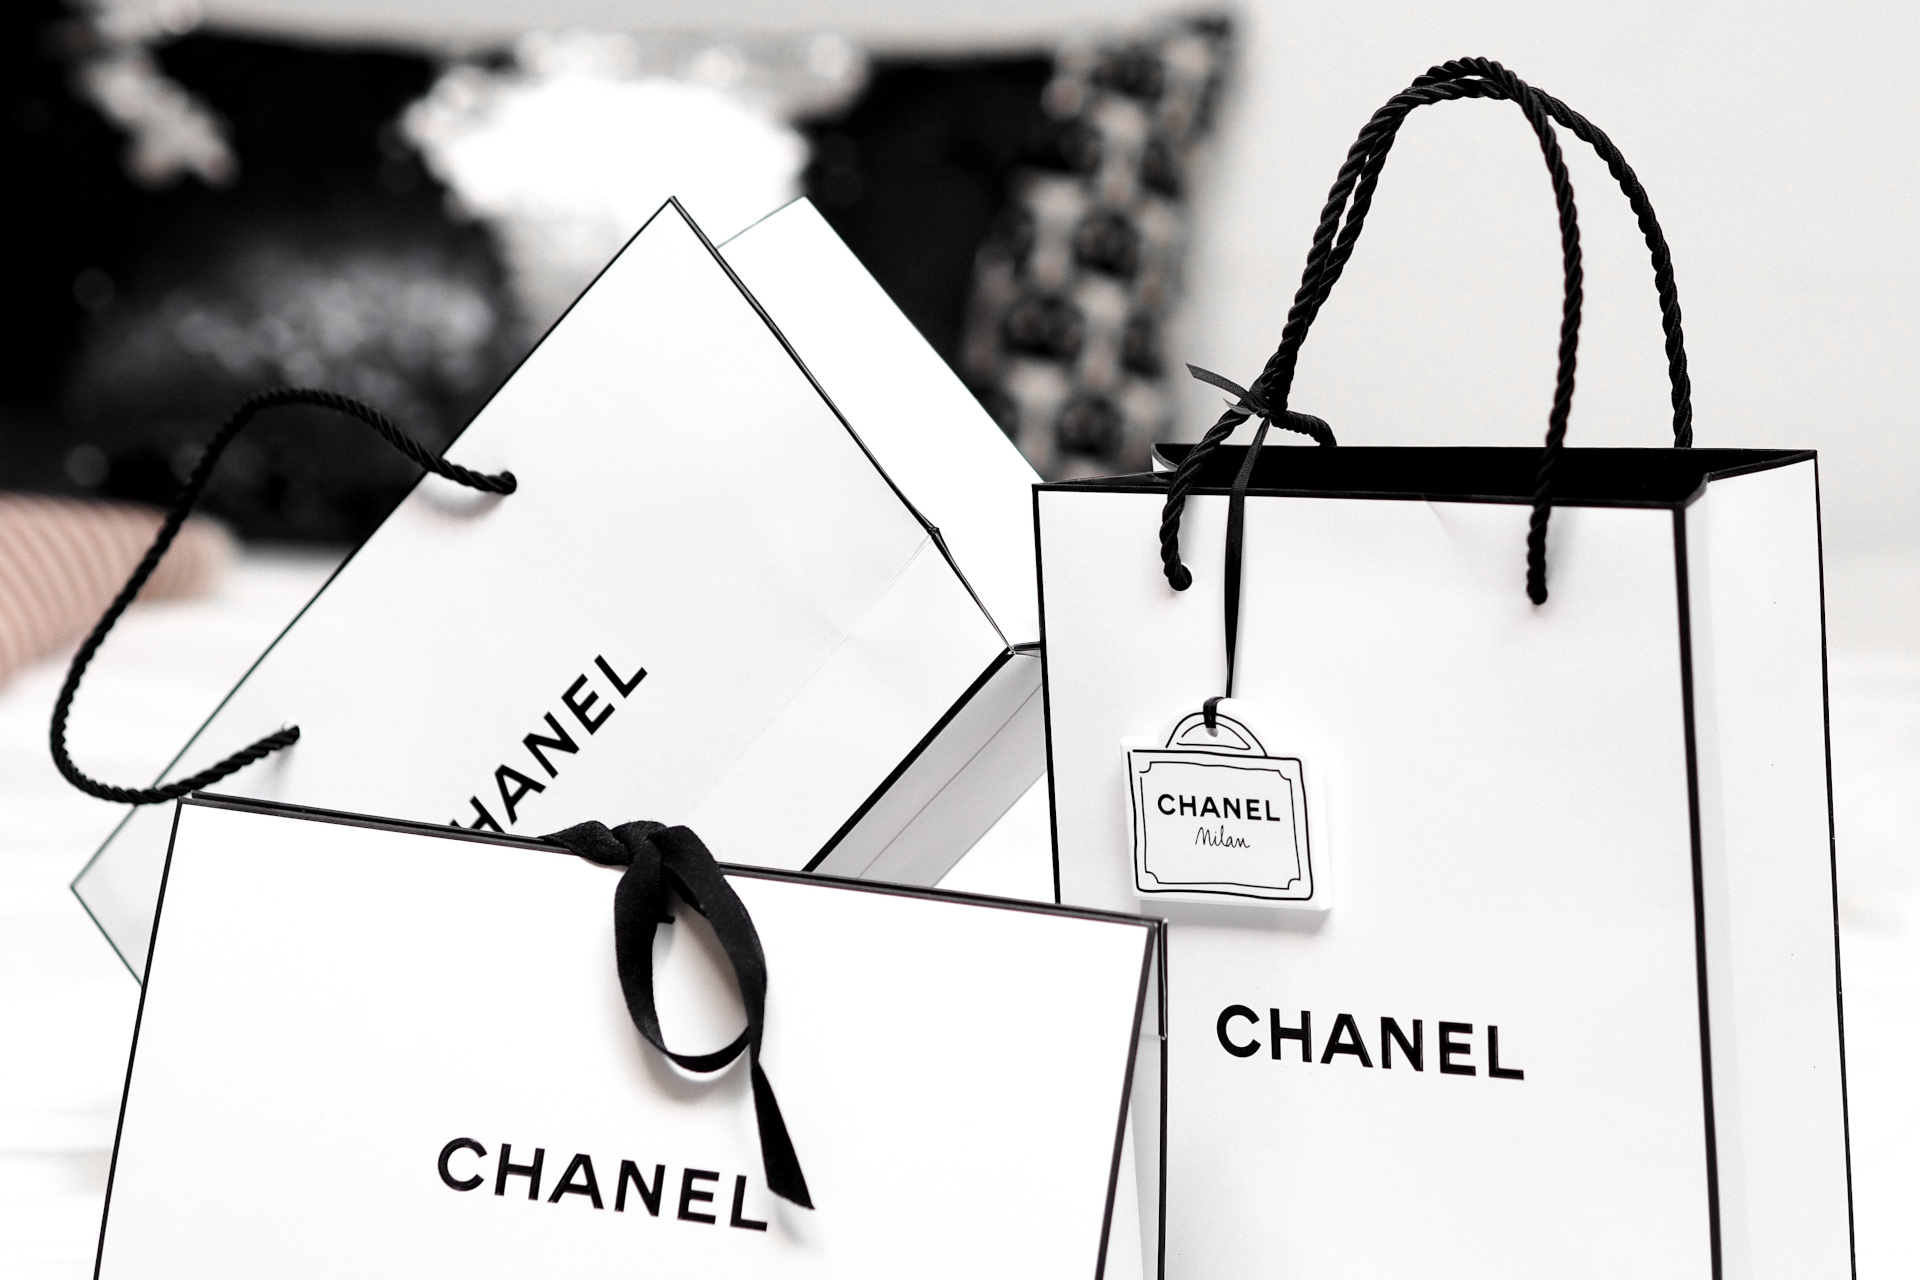 Bonhams' Upcoming Sale Spotlights Some of Chanel's Greatest Hits – JCK